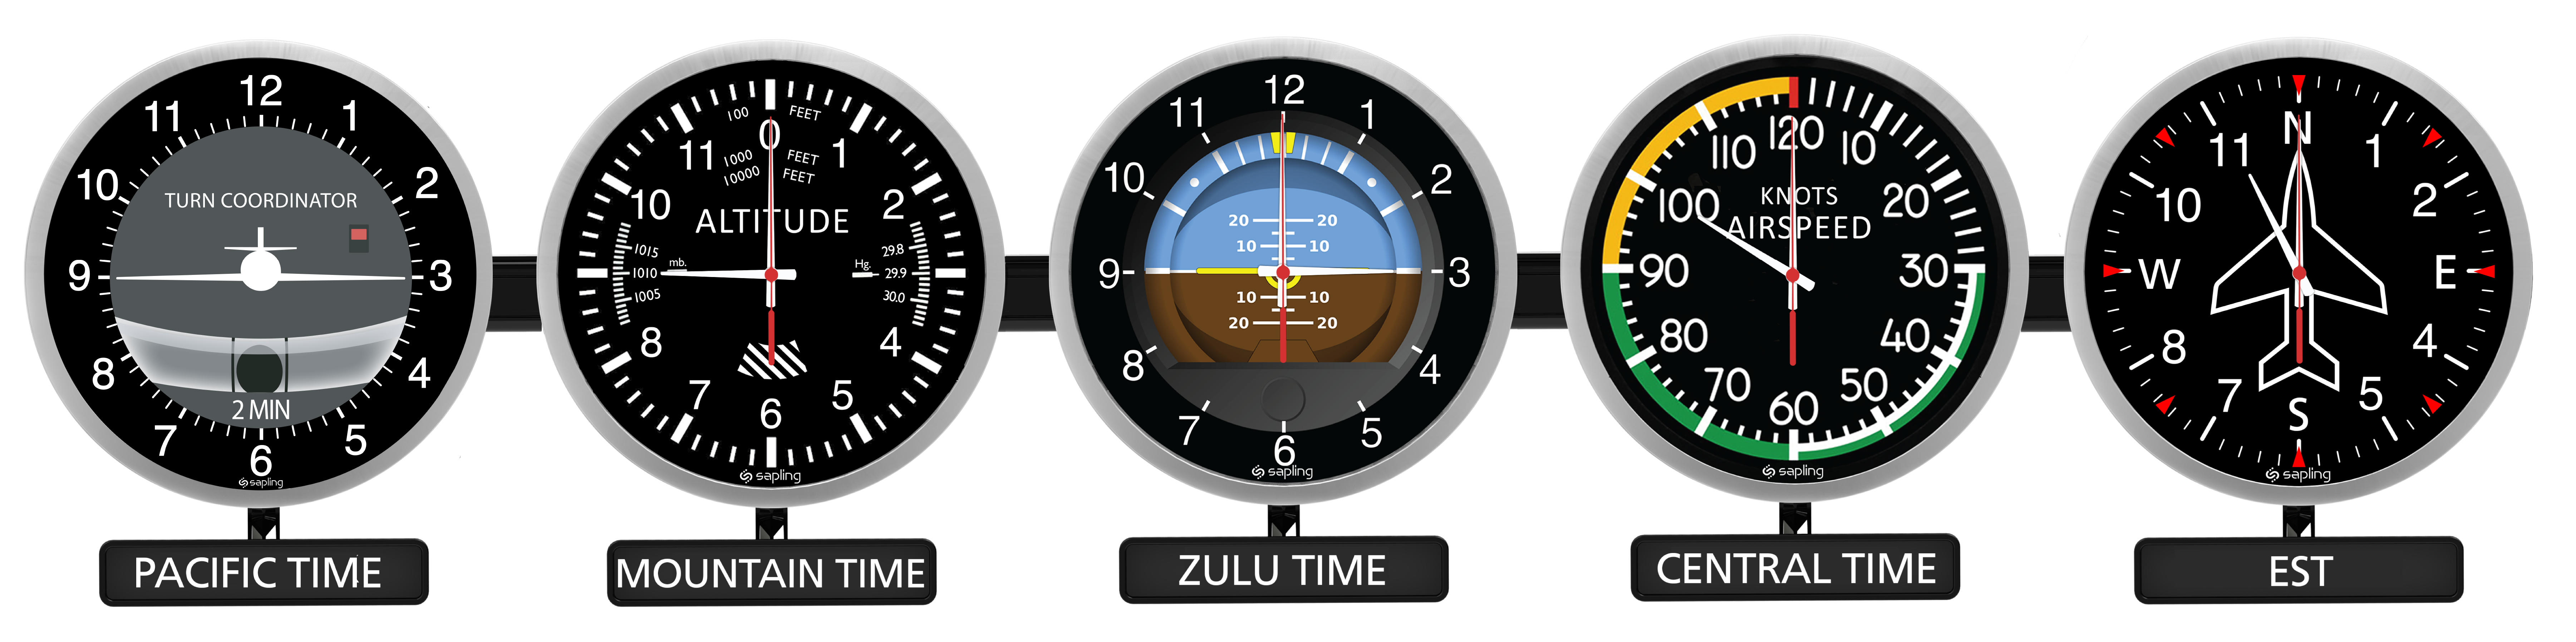 Aviation Time Zone Clock